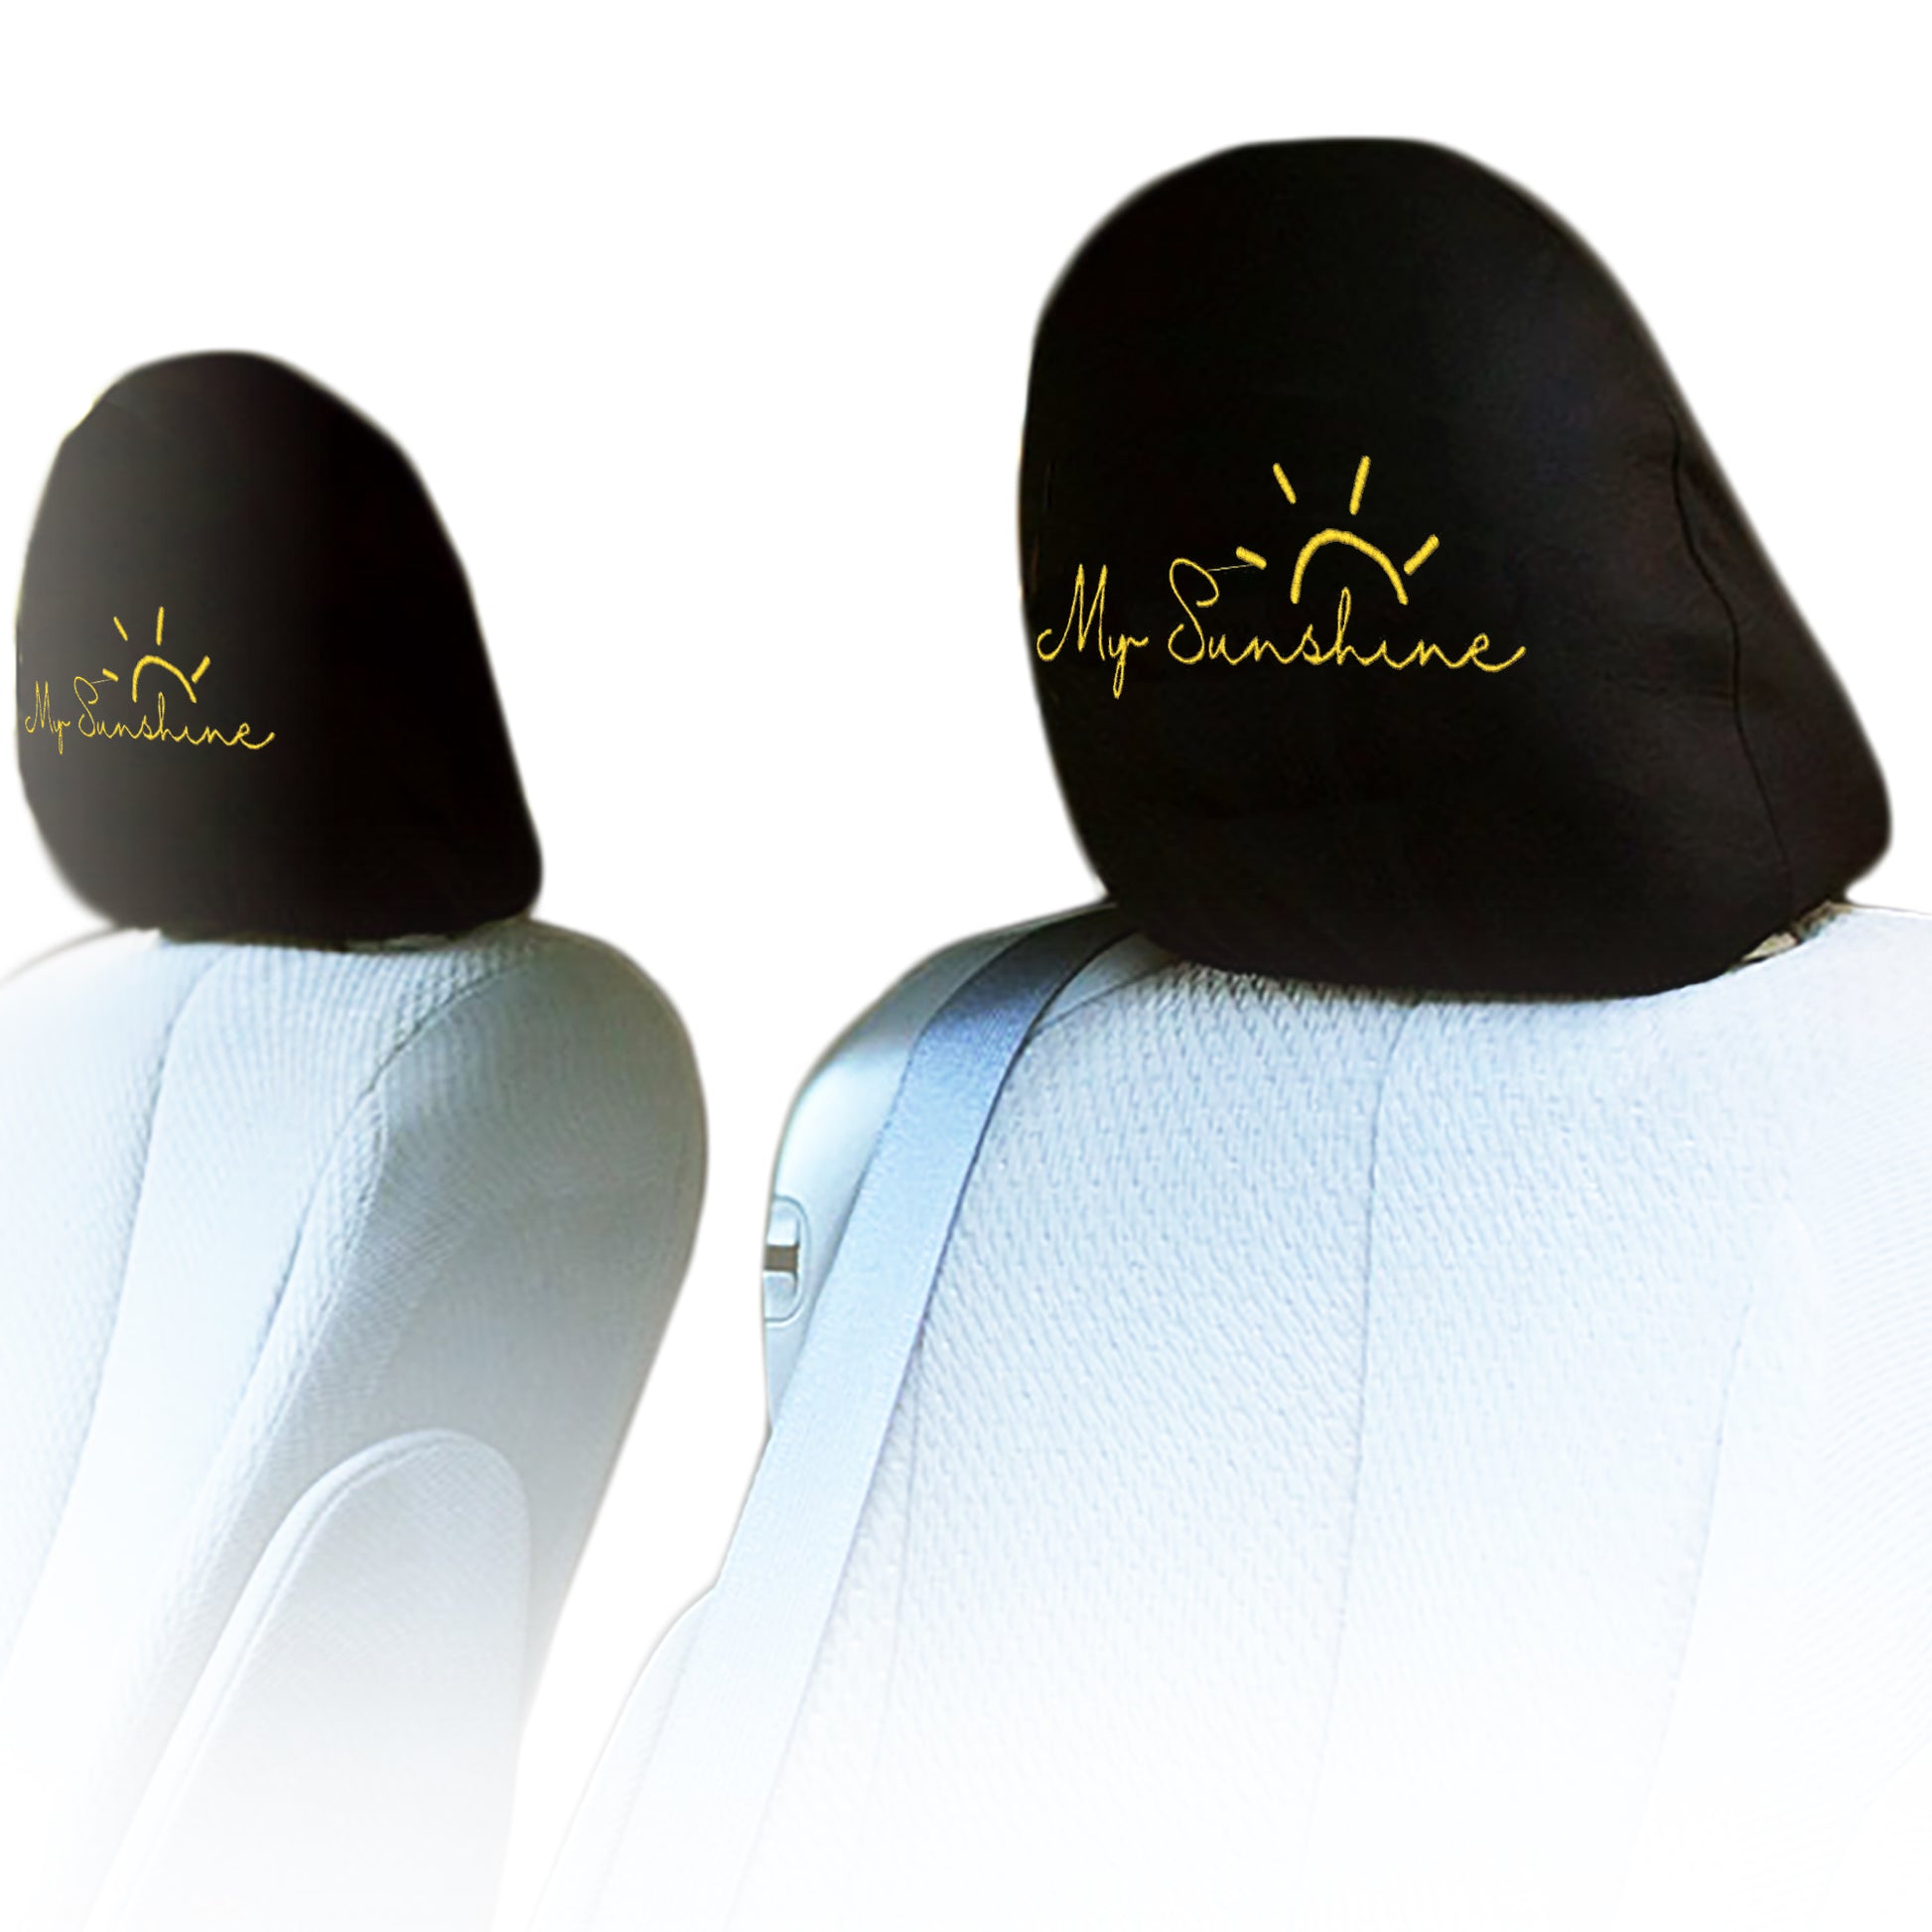 My Sunshine design headrest cover by pair